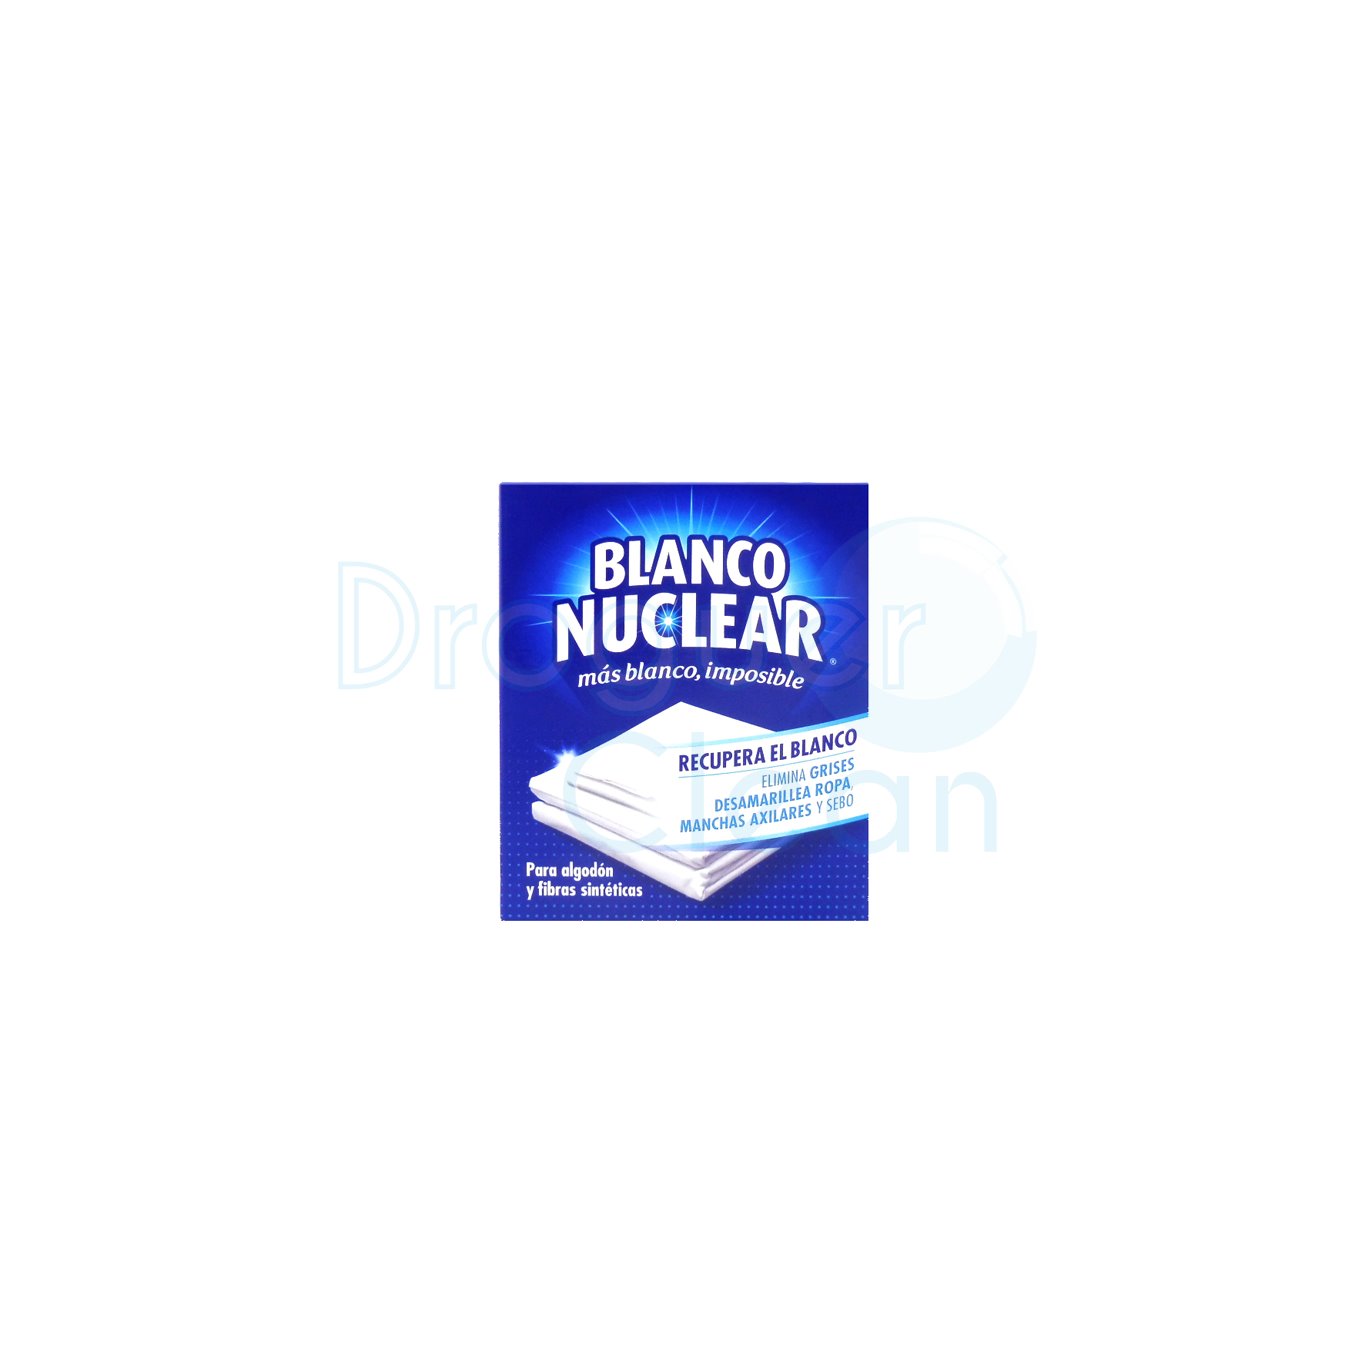 Blanqueador en Polvo Iberia Blanco Nuclear 120g